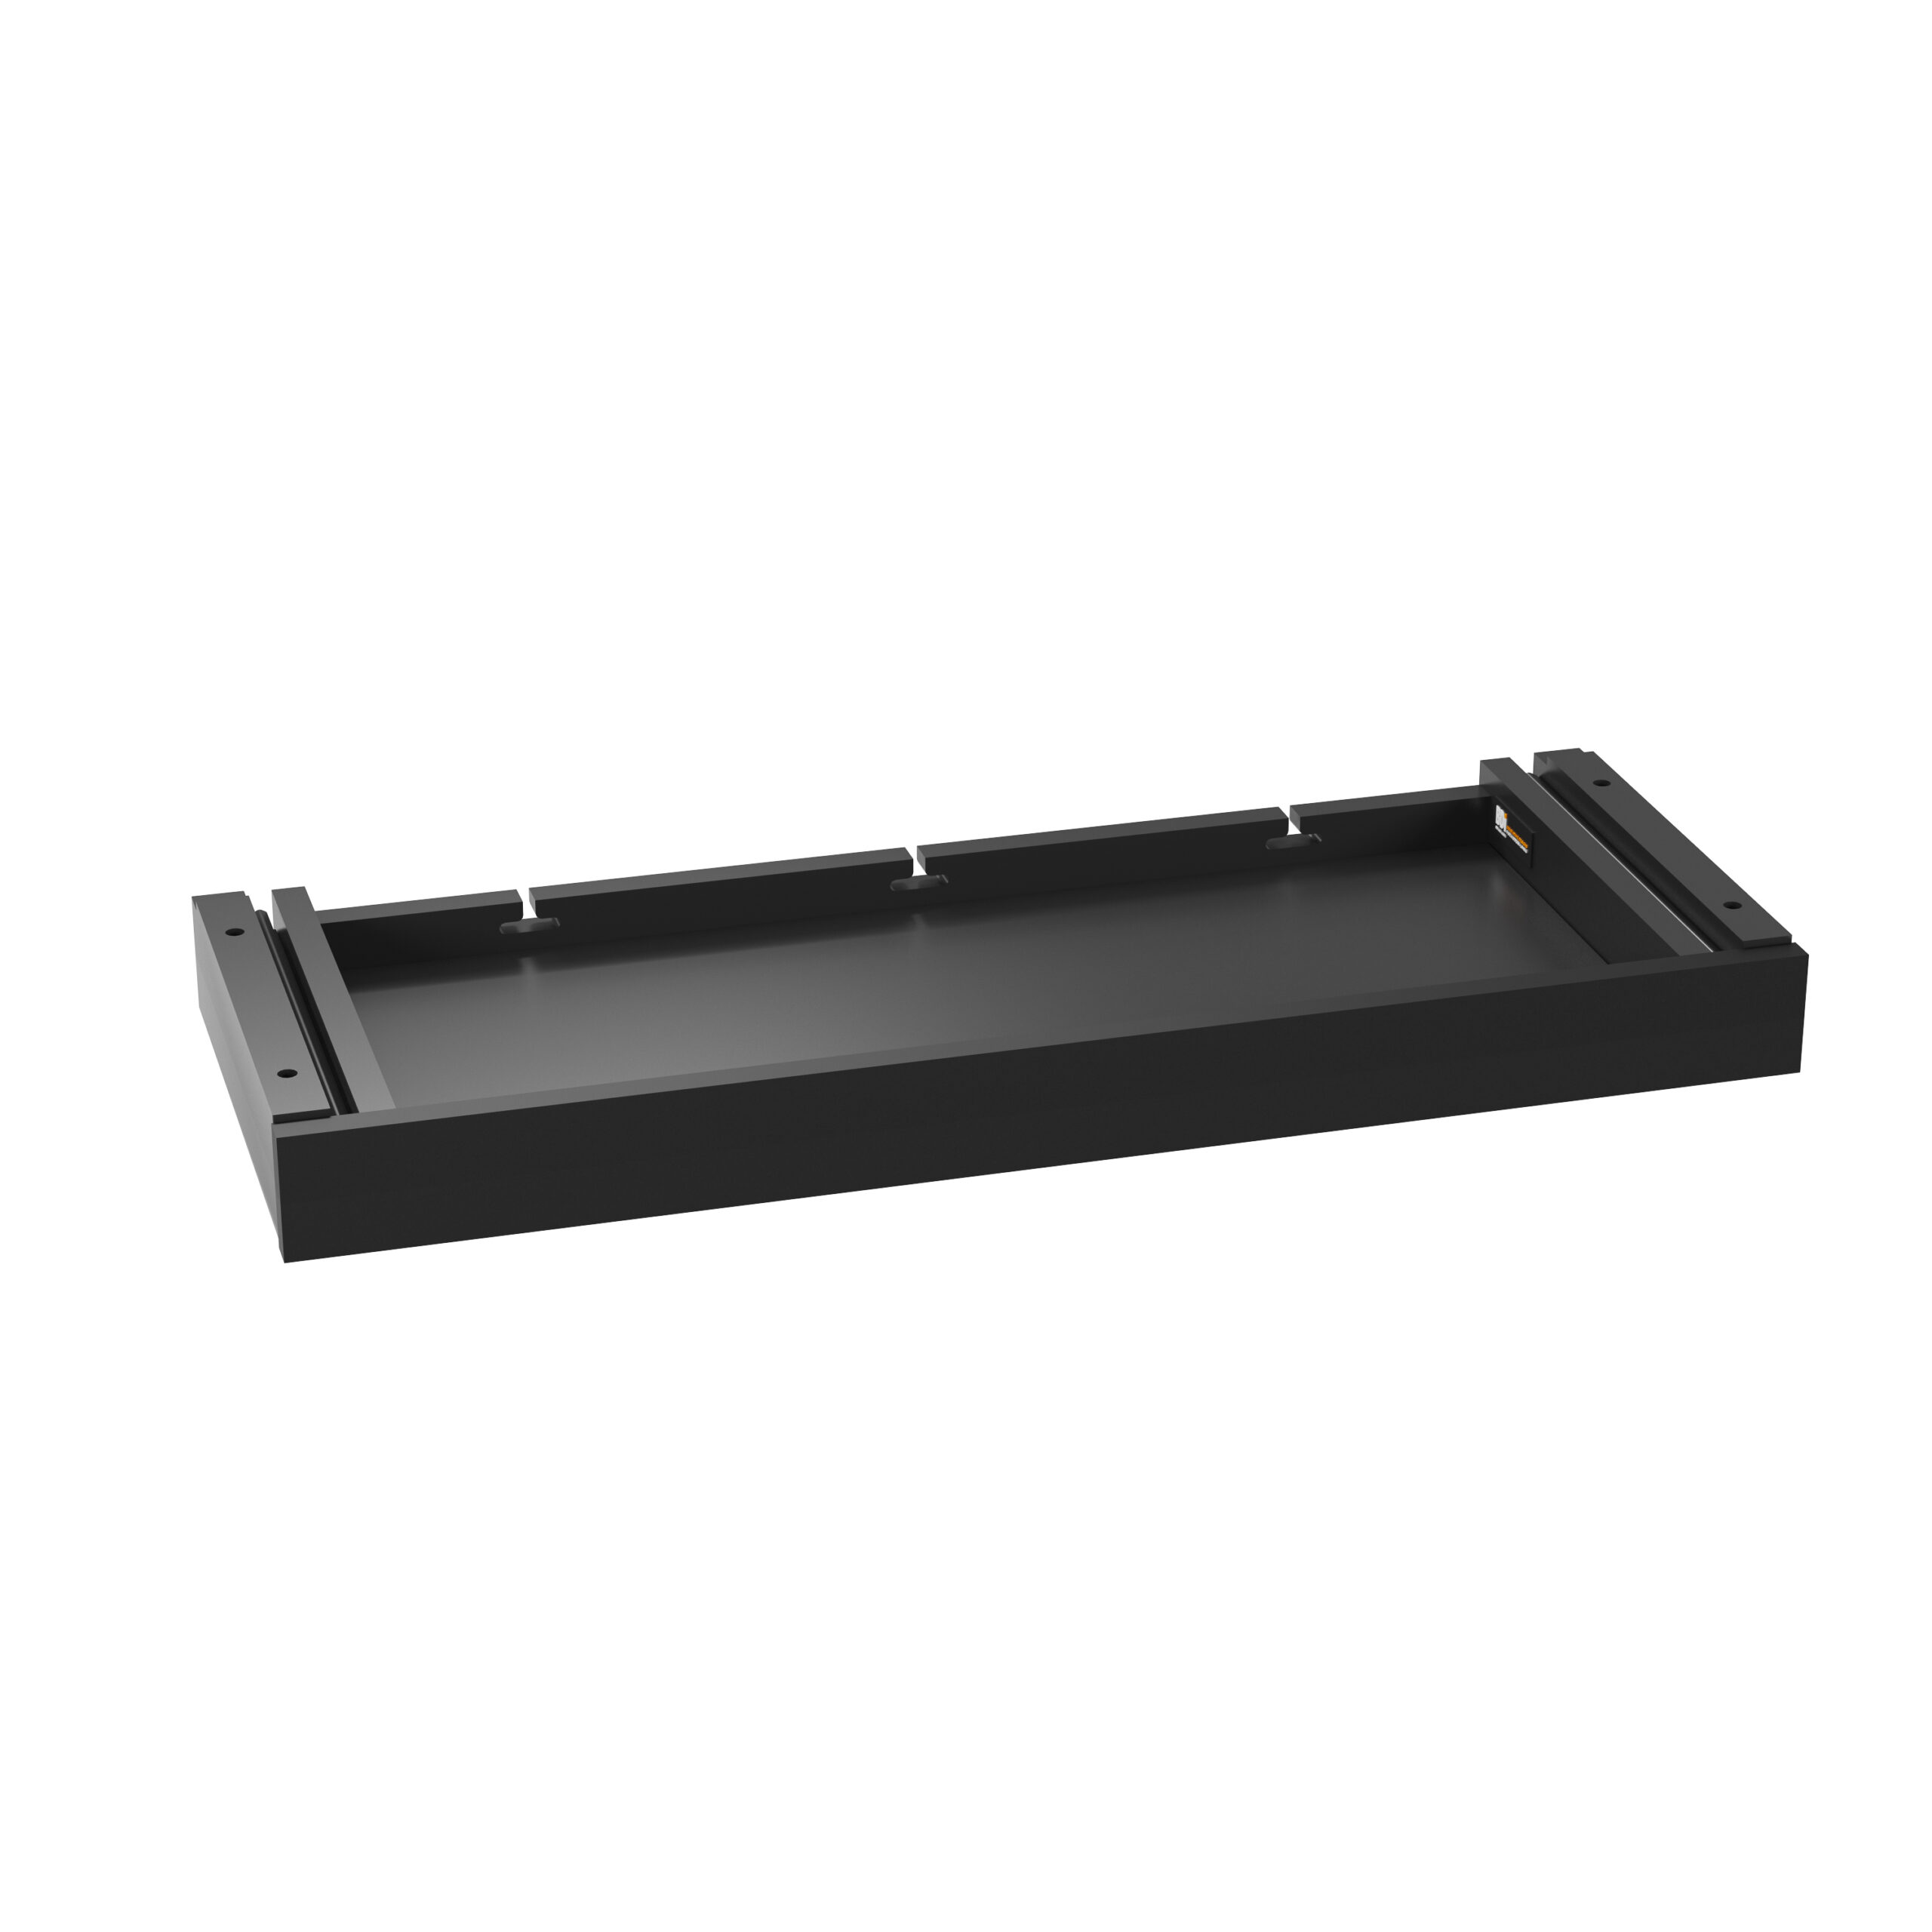 6659 Keyboard Drawer for Stance Standing Desks | BDI Furniture